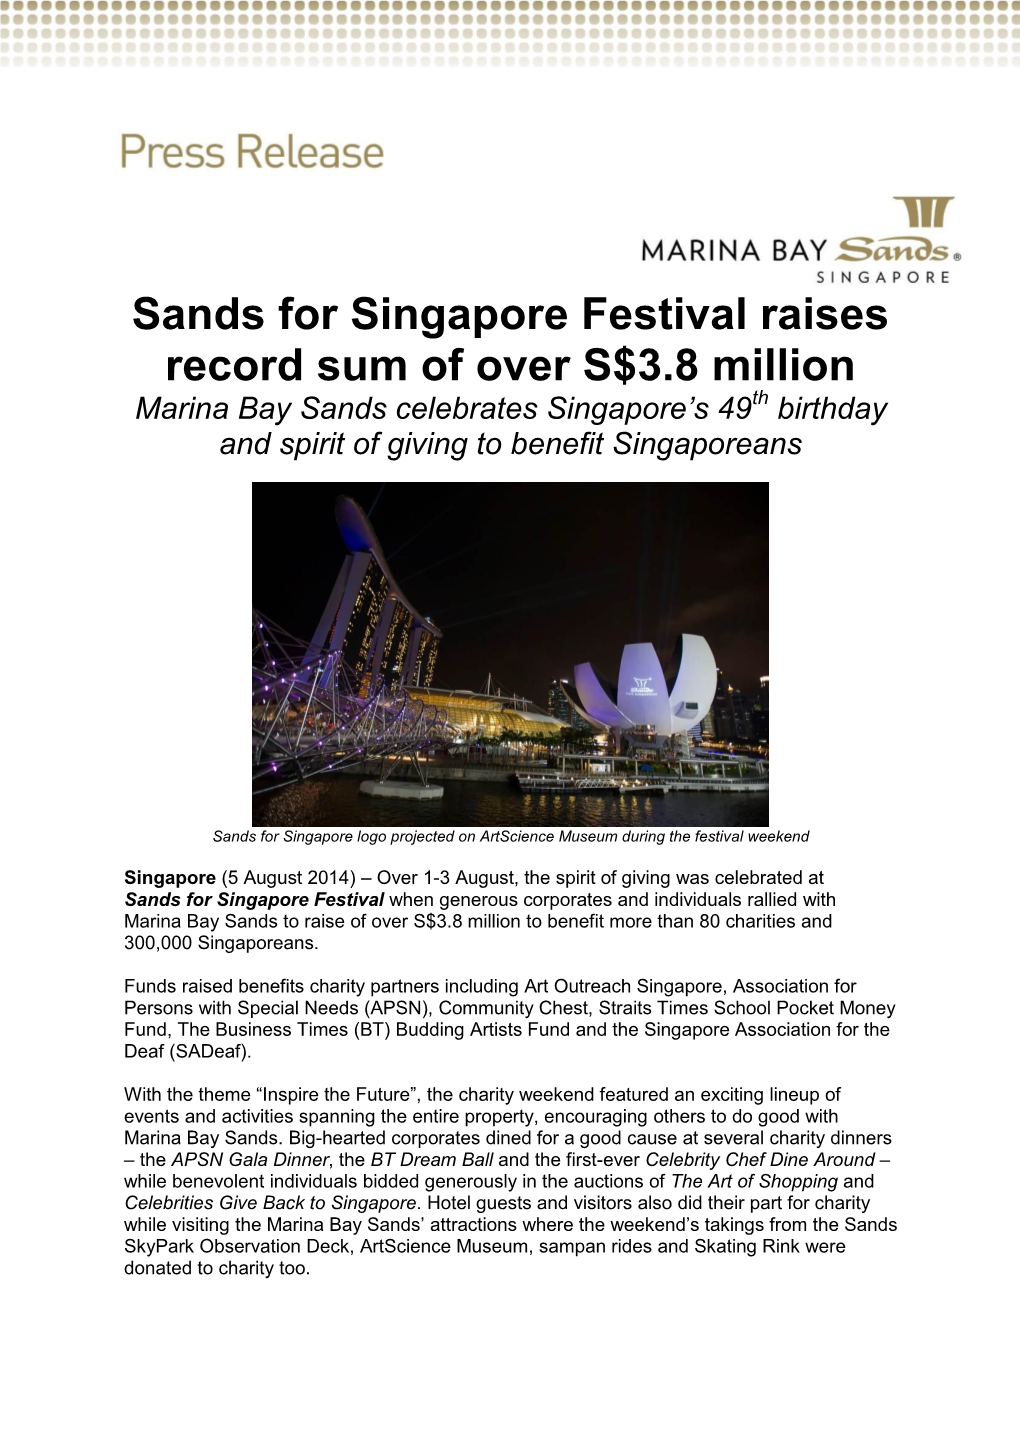 Sands for Singapore Festival Raises Record Sum of Over S$3.8 Million